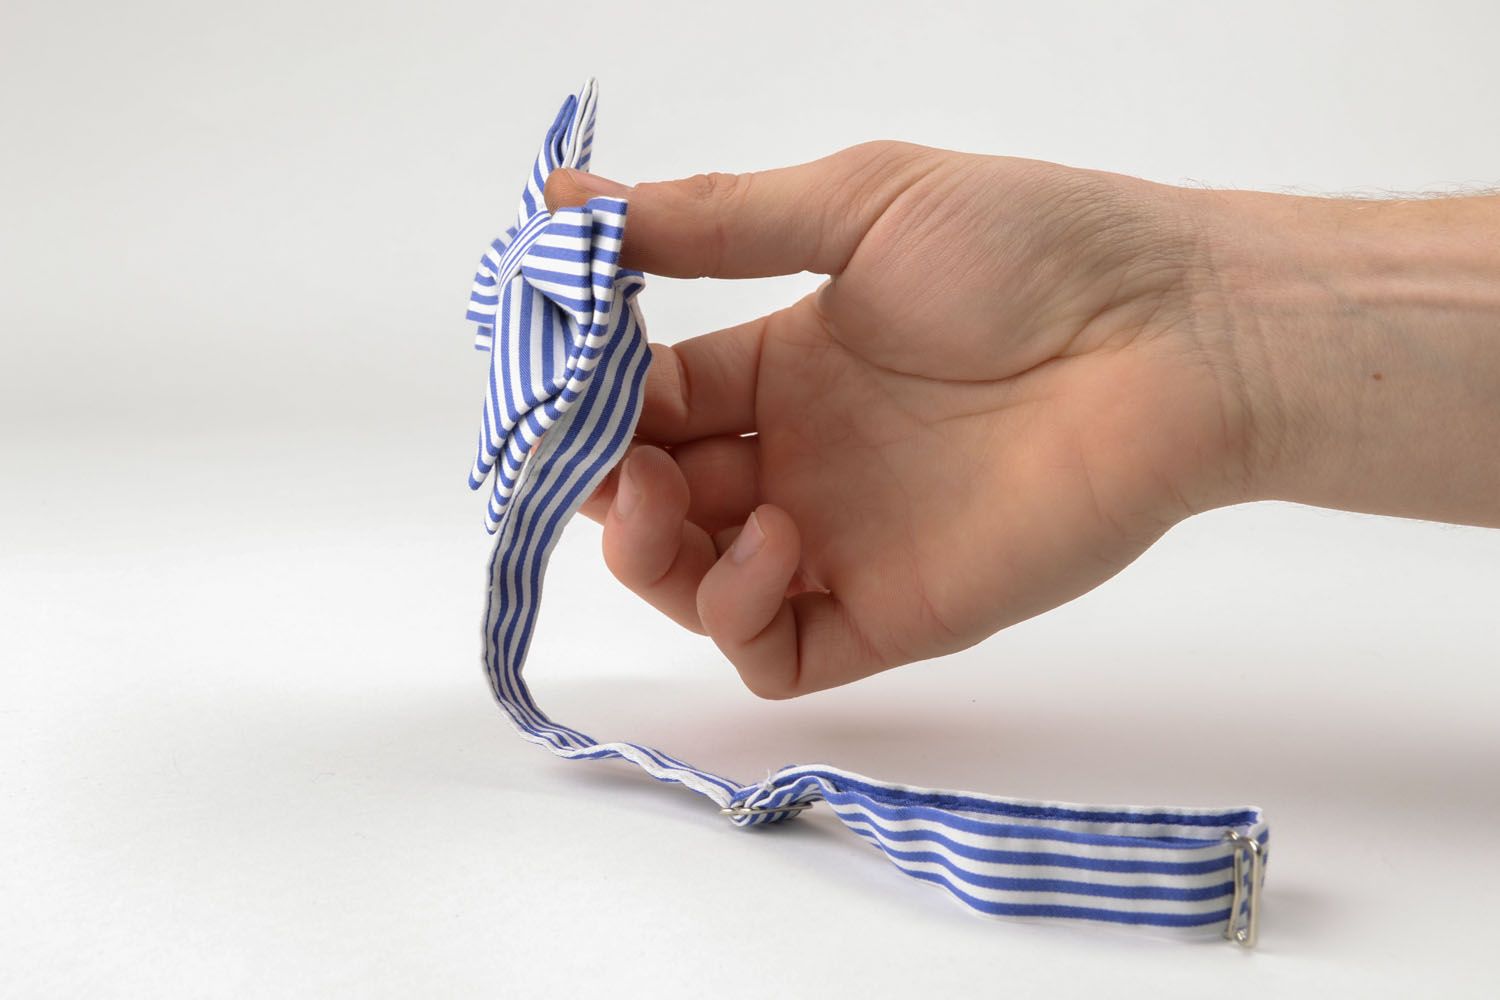 Полосатый галстук-бабочка фото 1